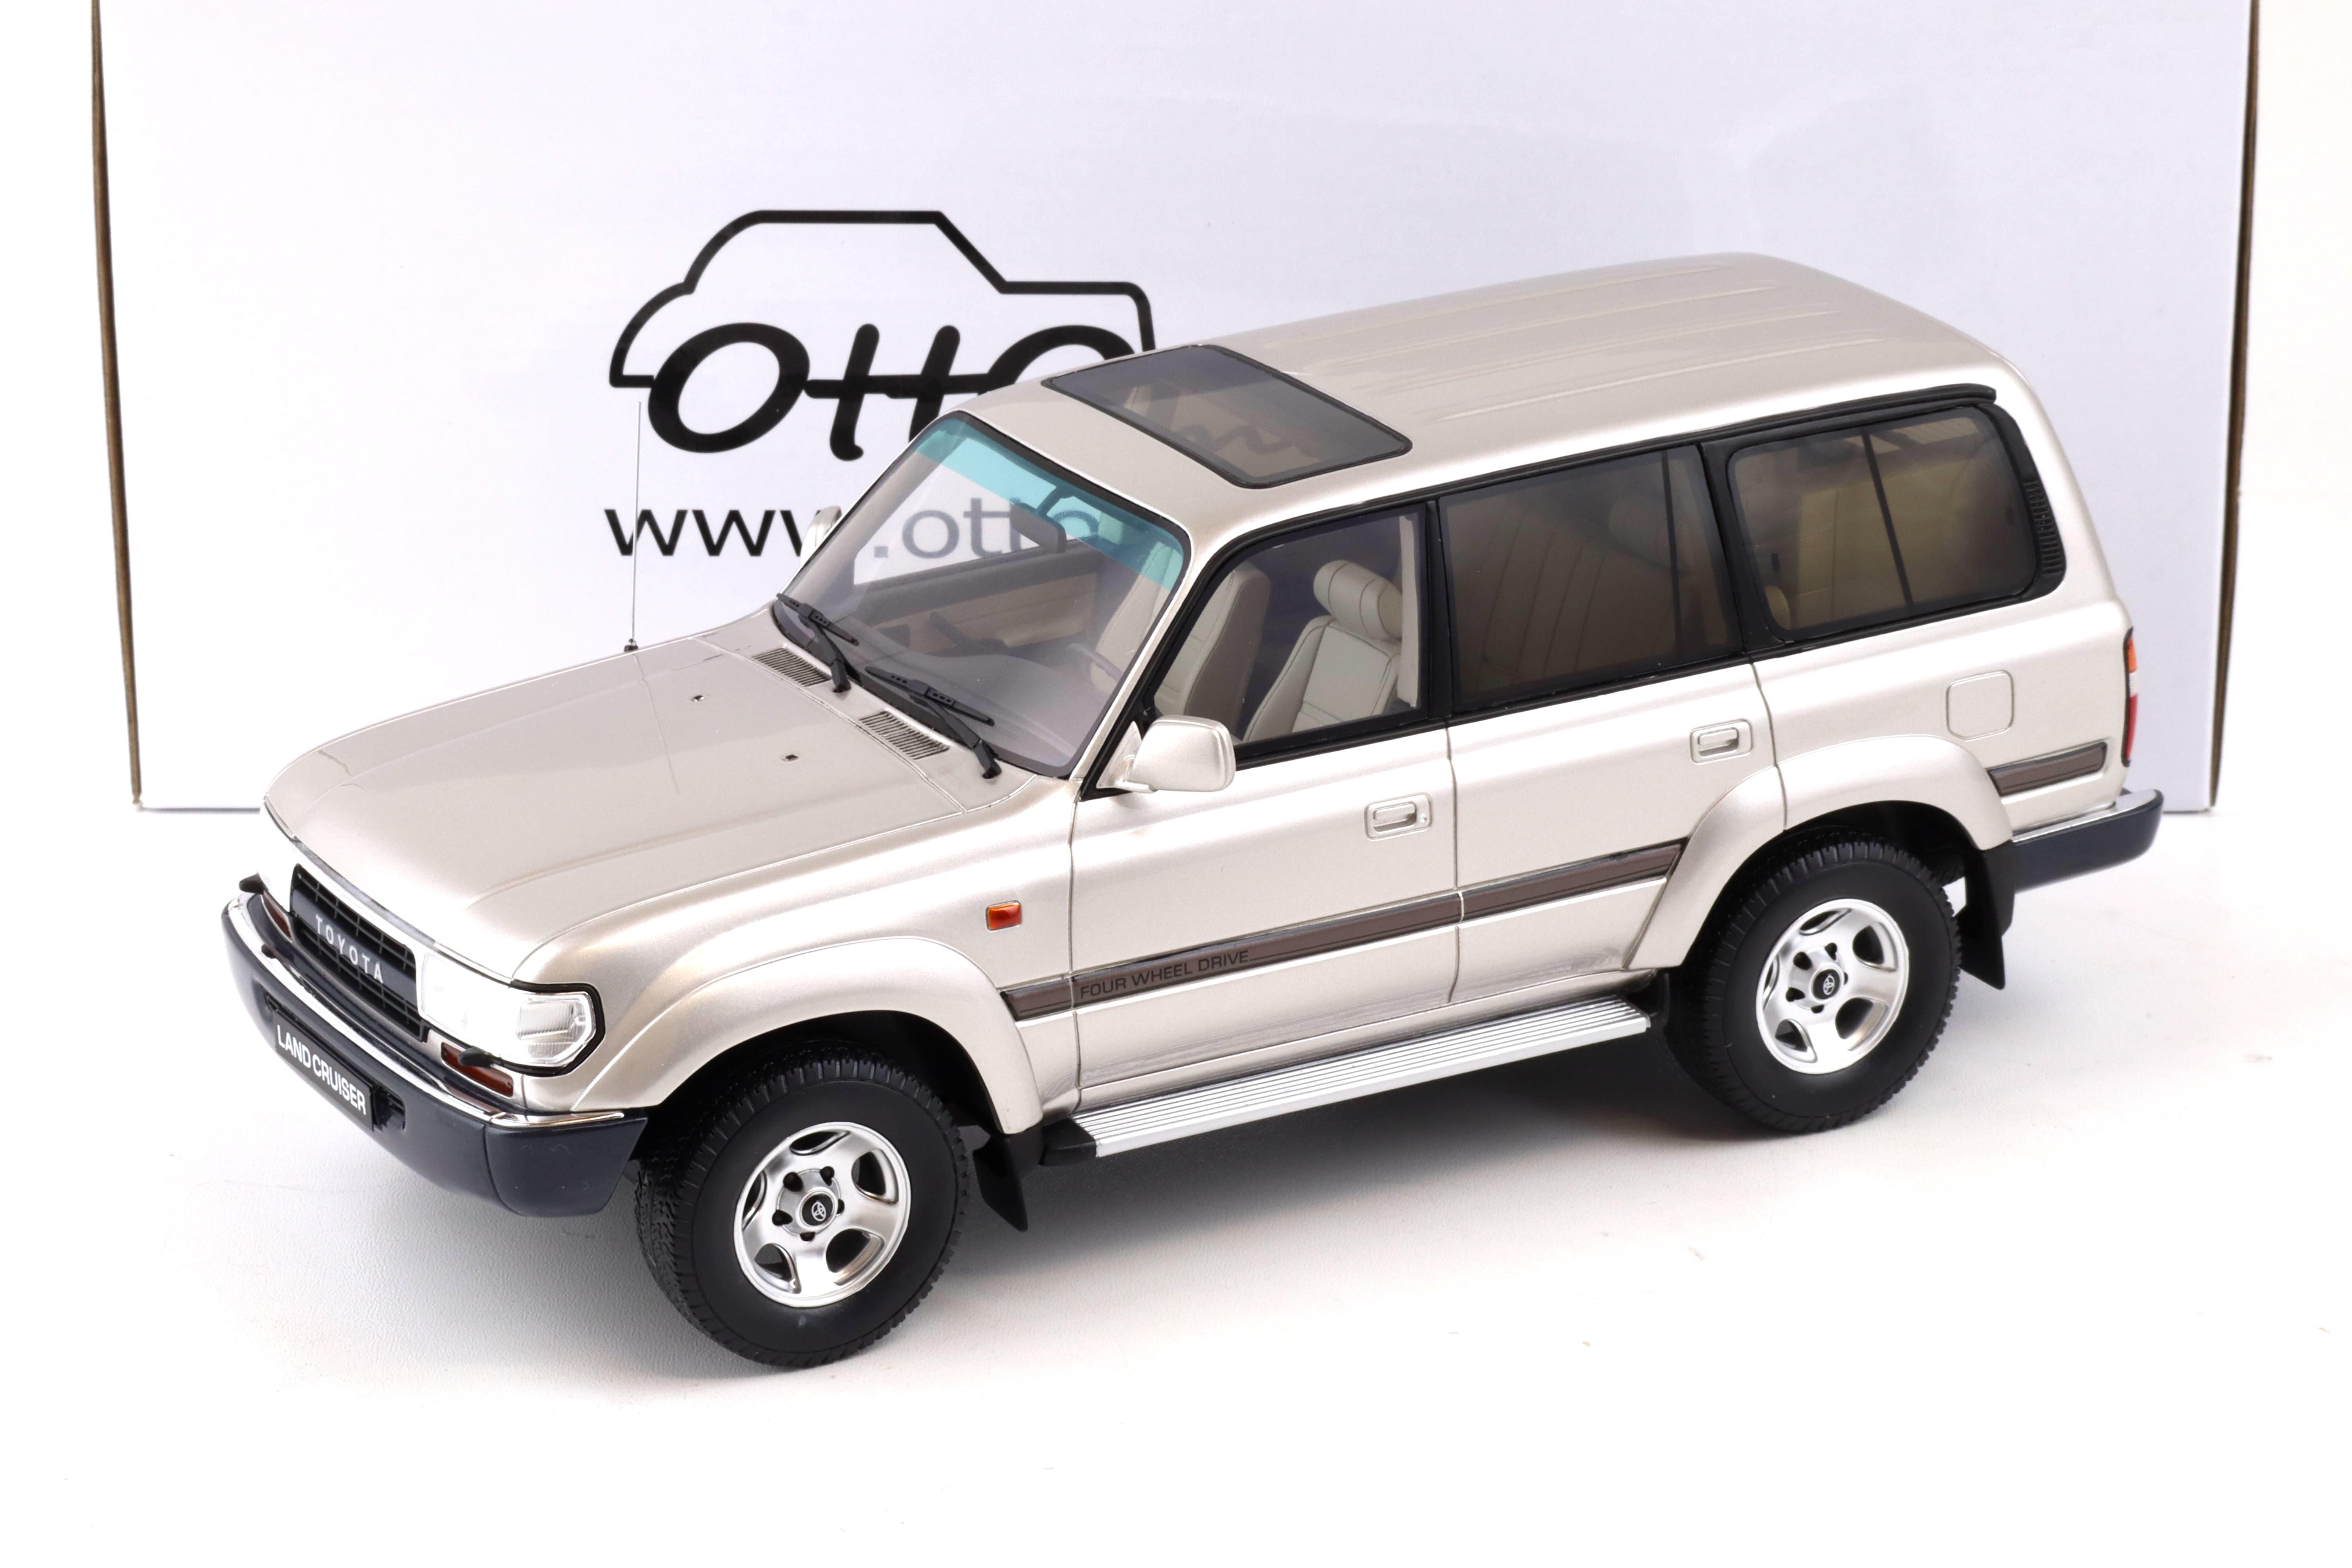 1:18 OTTO mobile OT438 Toyota Land Cruiser HDJ80 silver-beige 1992